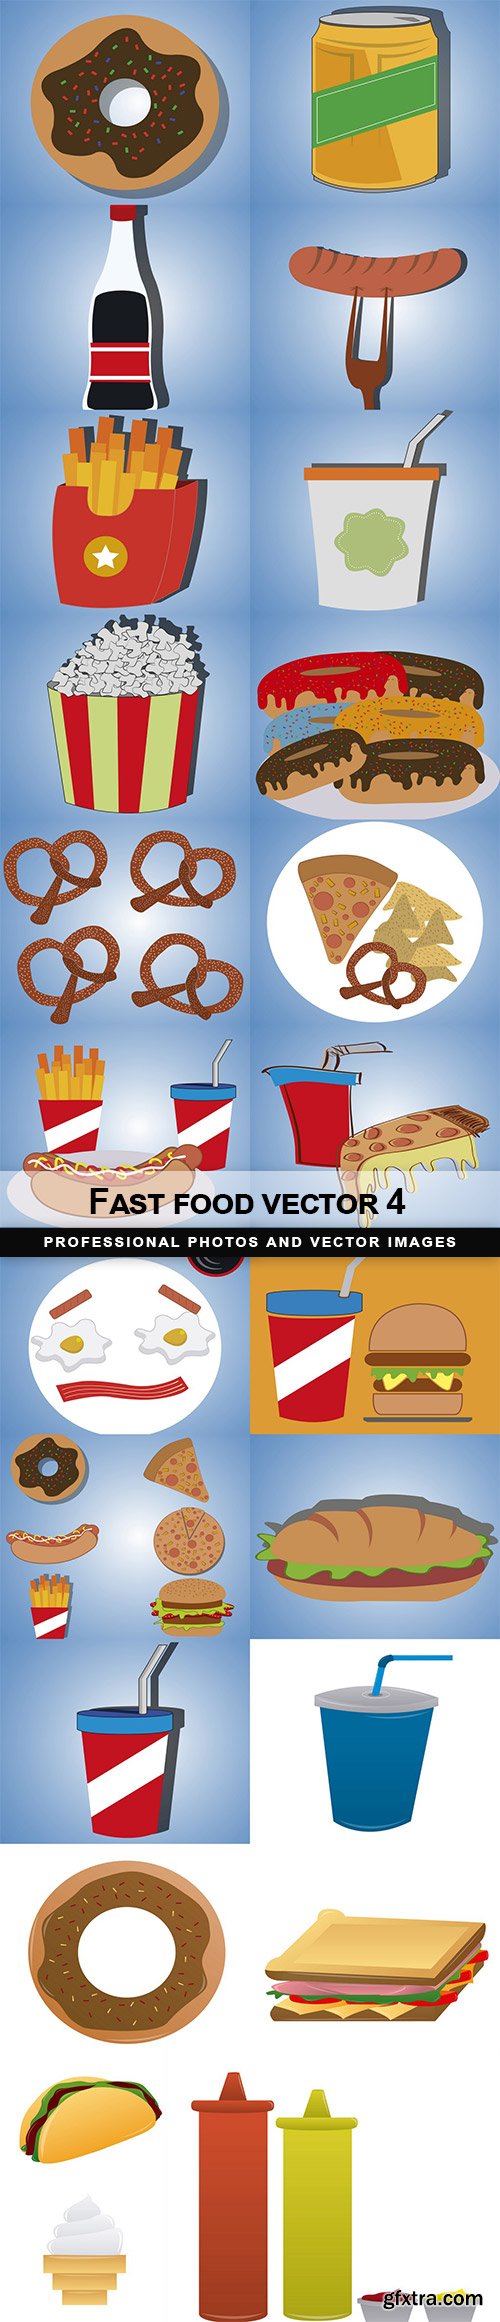 Fast food vector 4